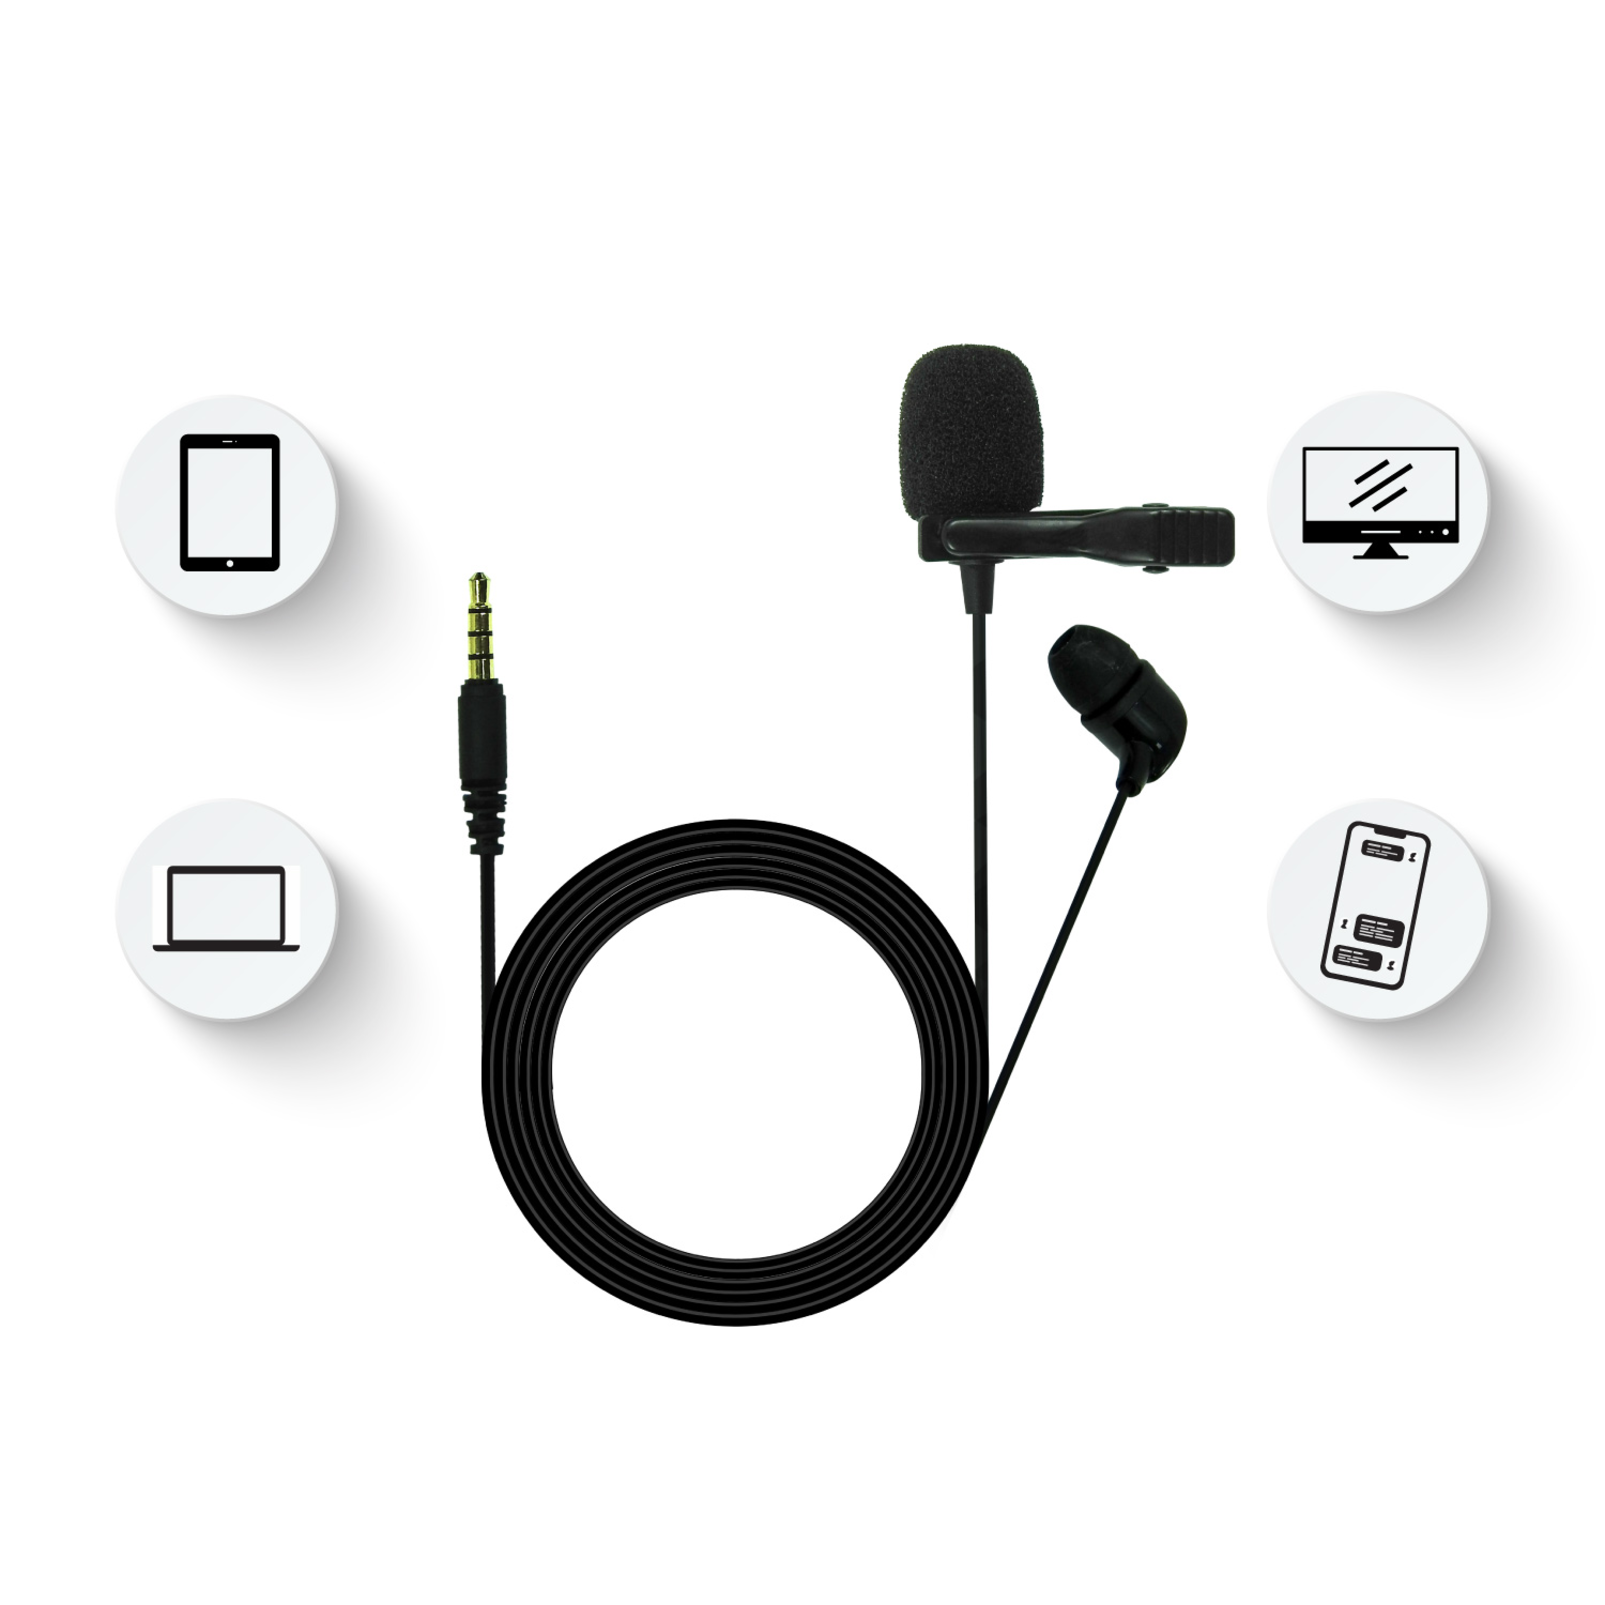 JBLCSLM20 - Black - Lavalier Microphone with Earphone - Detailshot 3